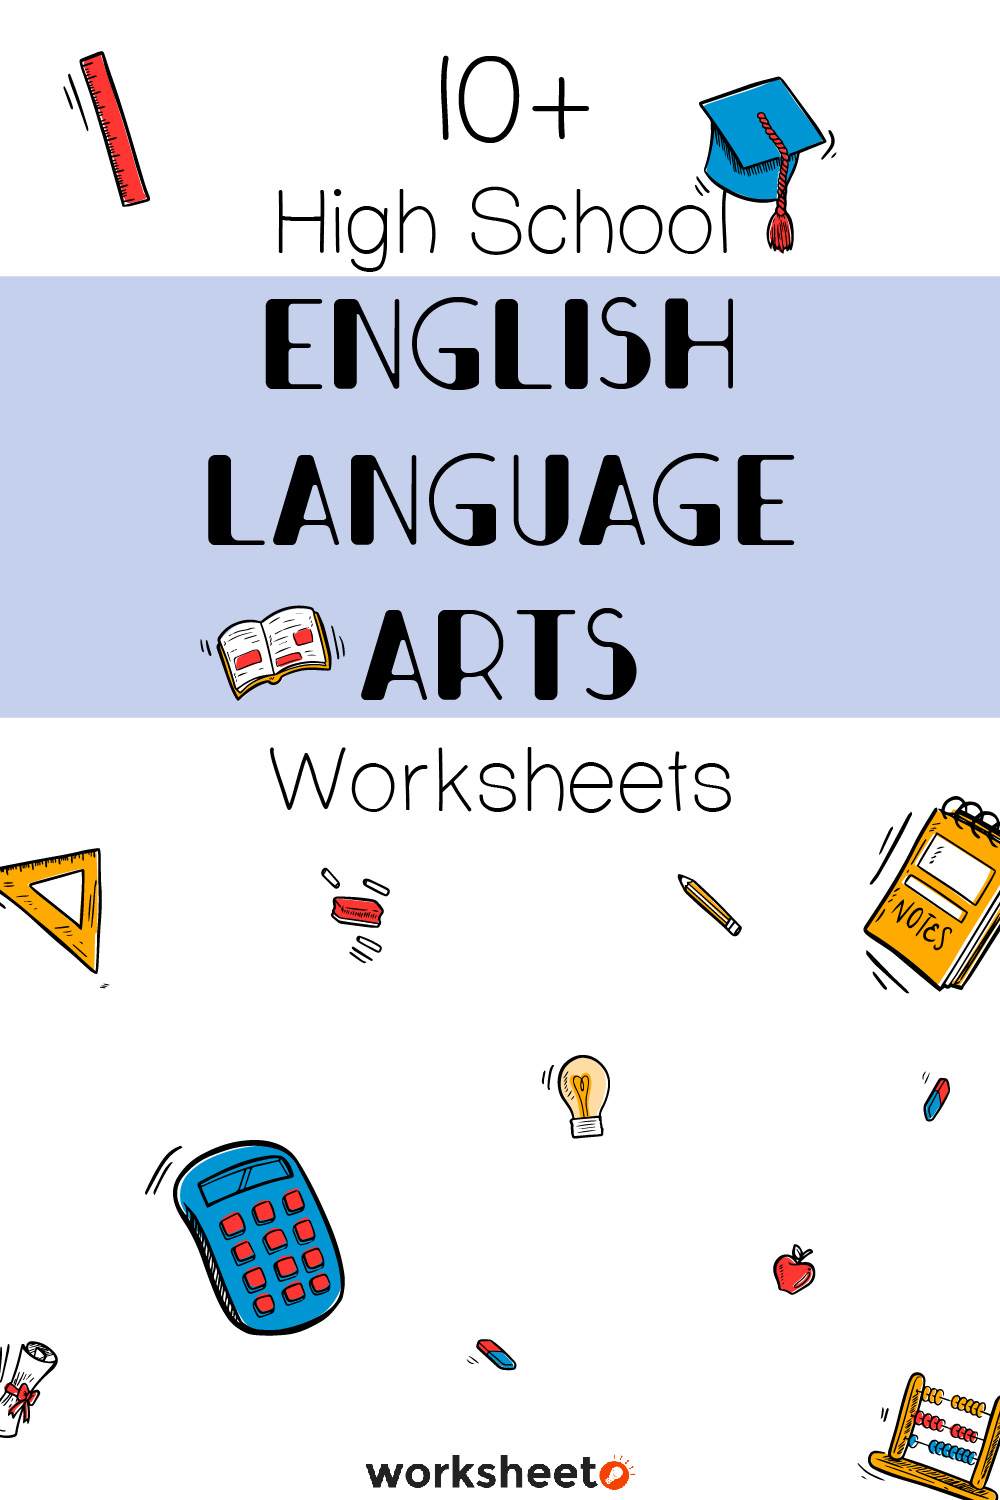 High School English Language Arts Worksheets